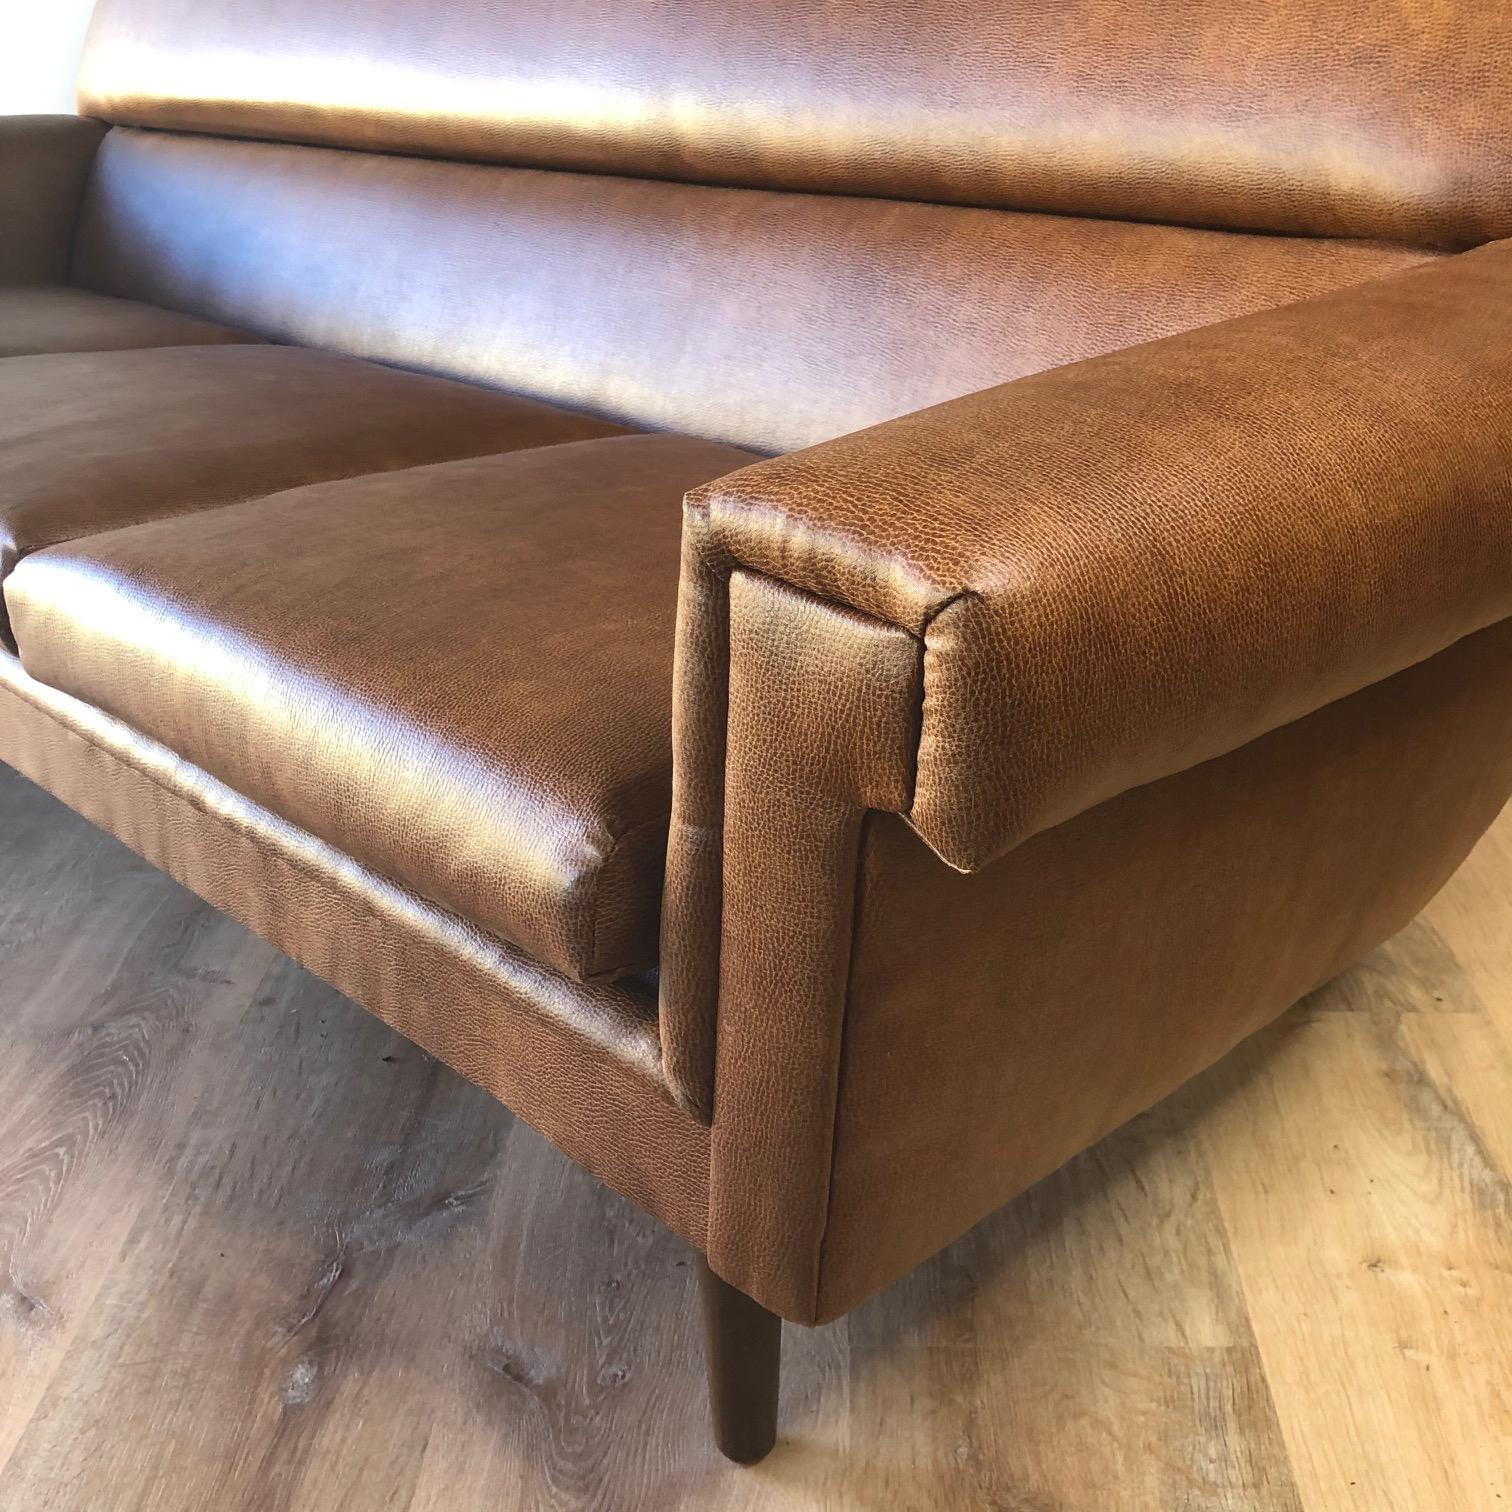 Danish Modern Leather Sofa